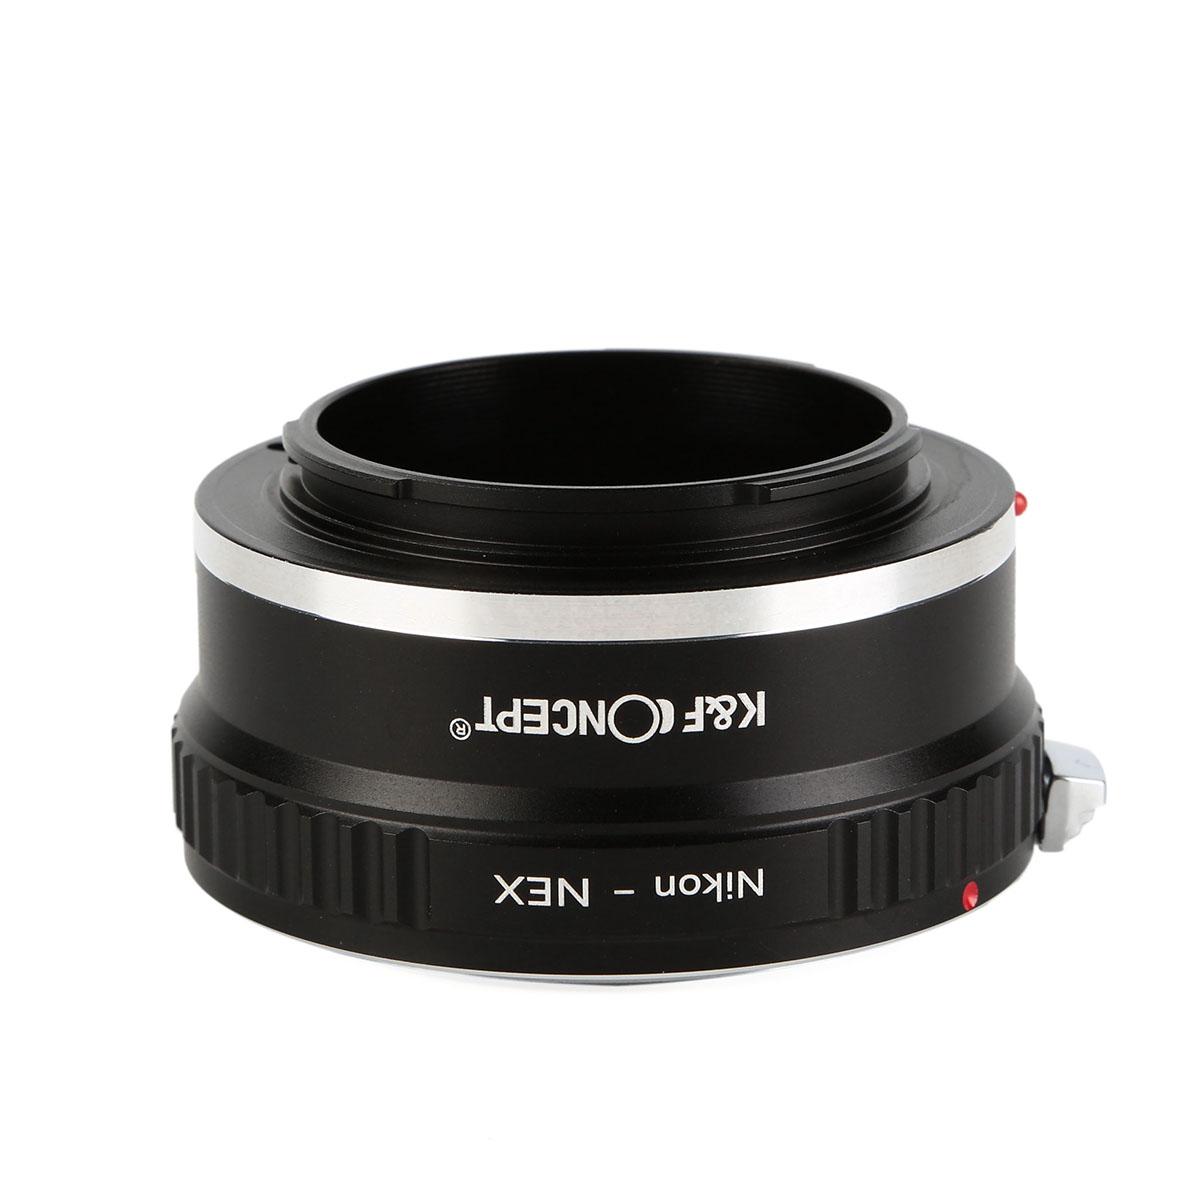 Nikon F Lenses to Sony E Mount Camera Adapter with Tripod Mount